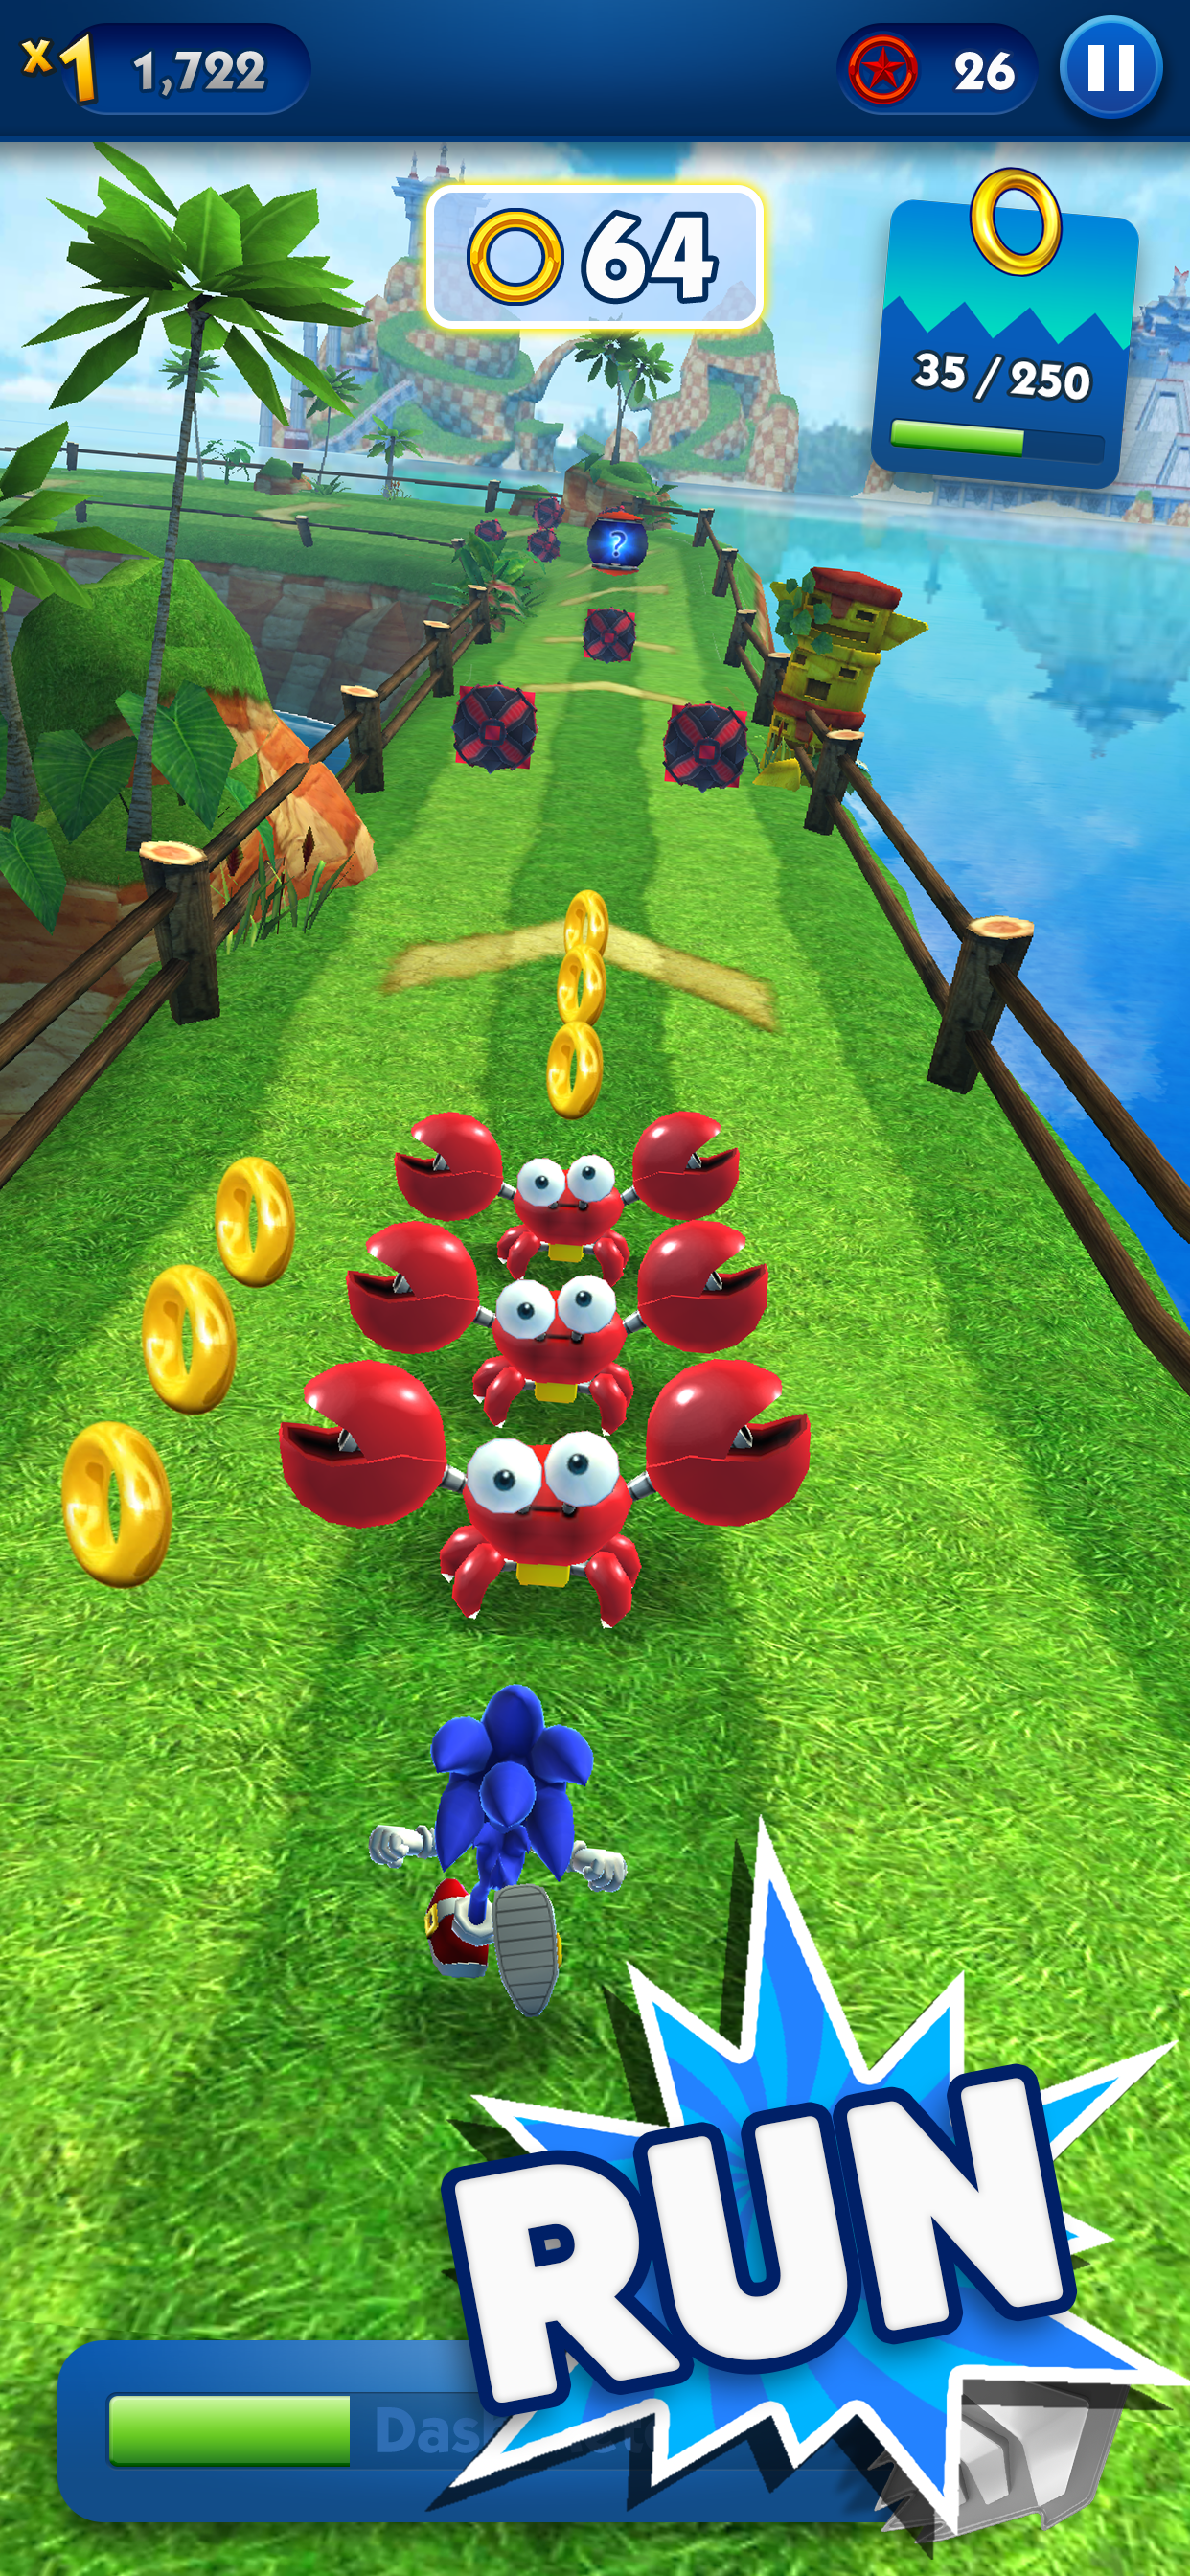 Play Sonic Dash - Endless Running Online